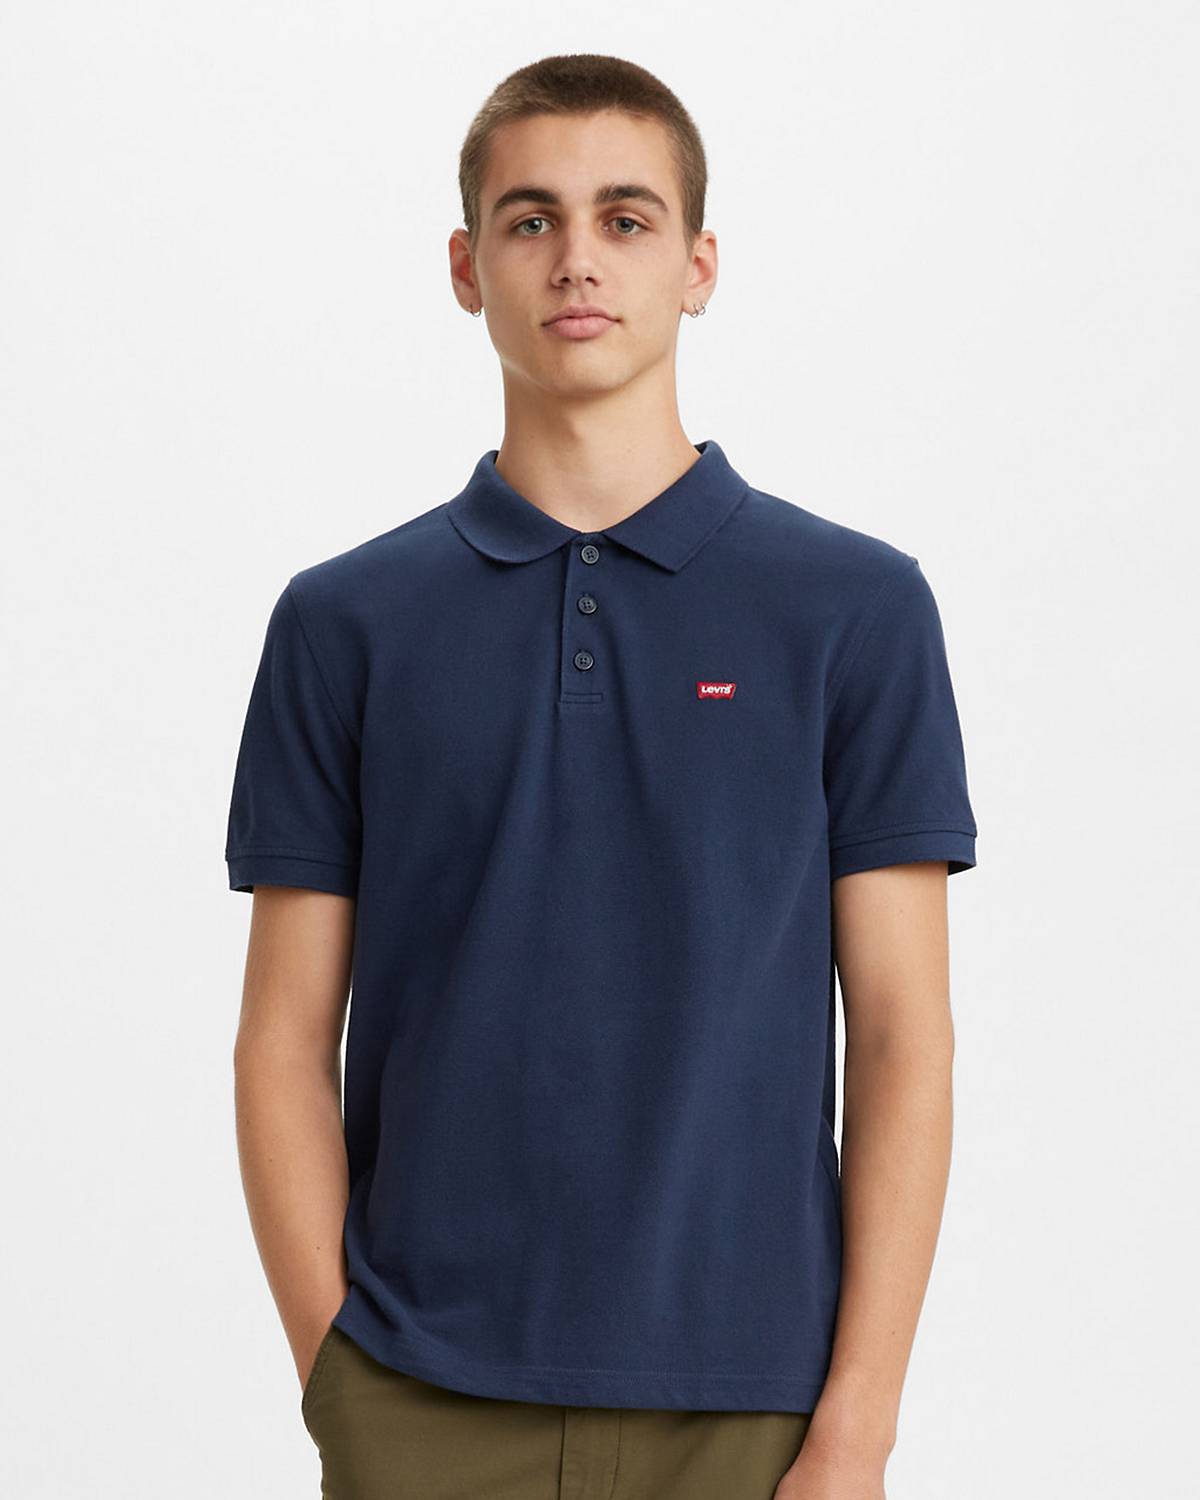 Model wearing a navy blue polo shirt.